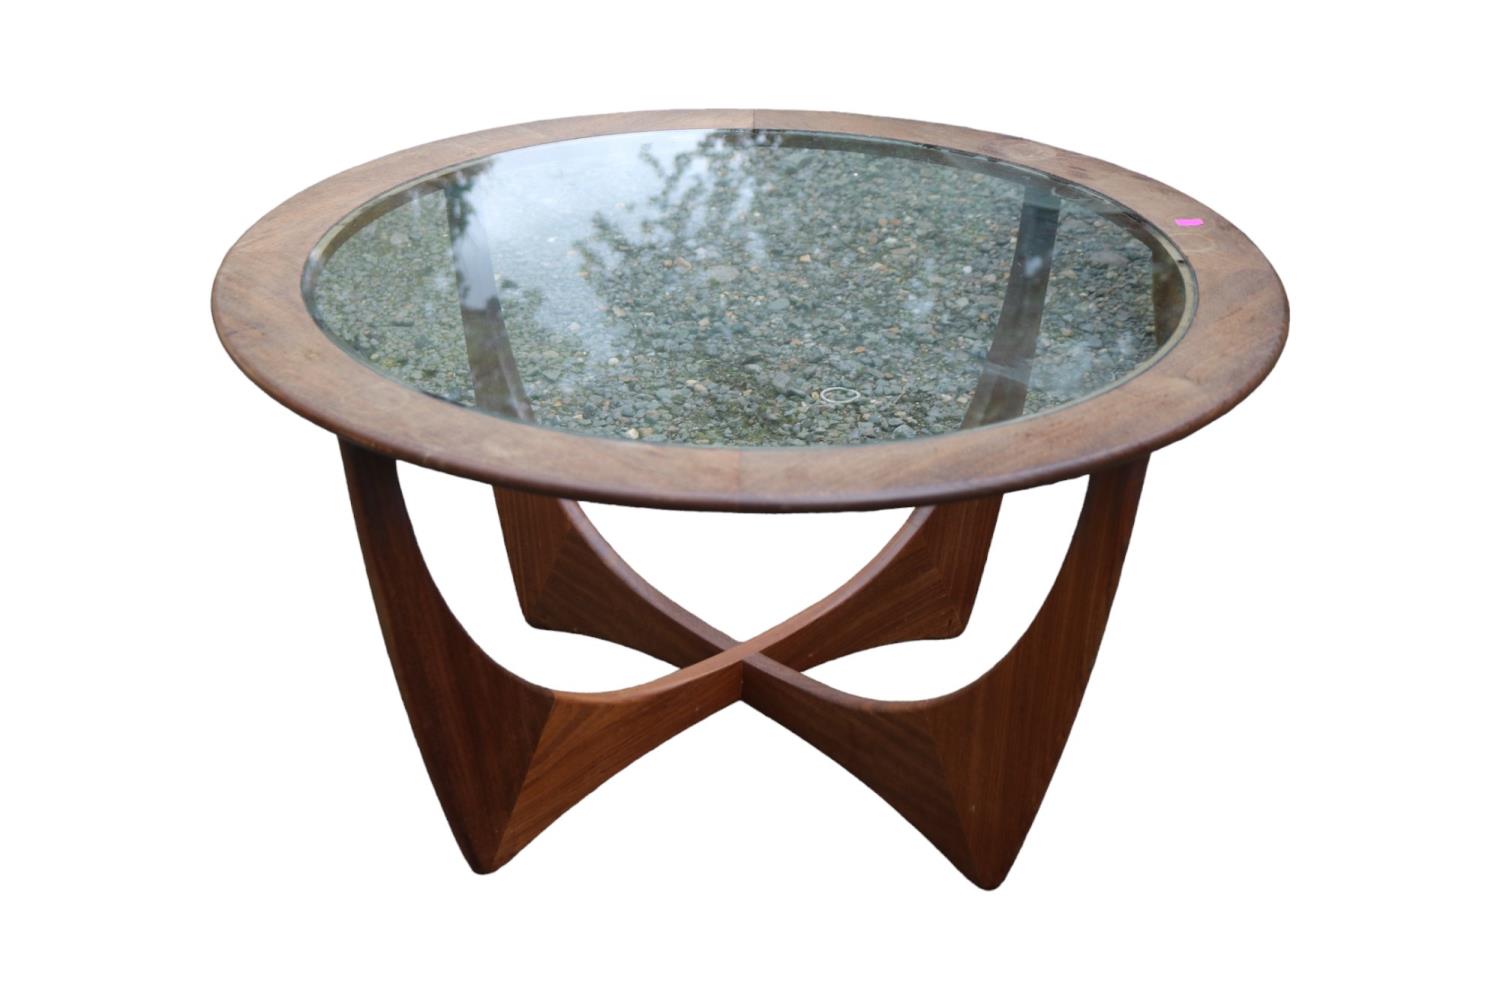 G-Plan Astro Circular Coffee table 1960s designed by Gordon Murray 83cm in Diameter